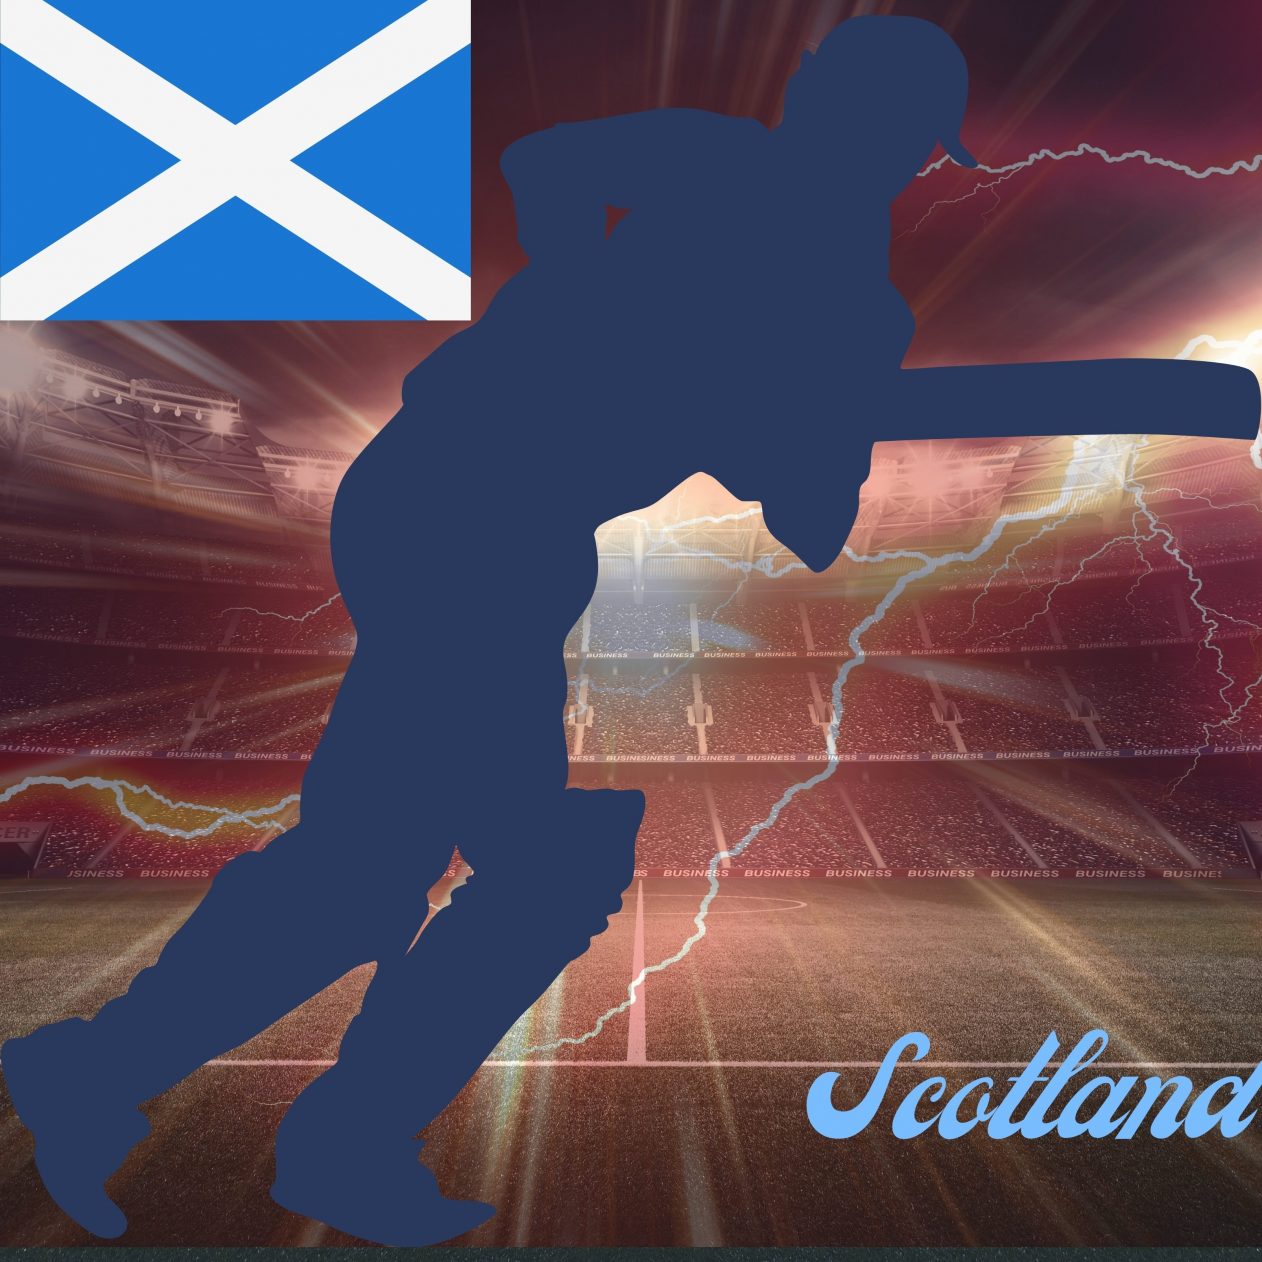 1262x1262 Parallax wallpaper 4k Scotland Cricket Stadium iPad Wallpaper 1262x1262 pixels resolution